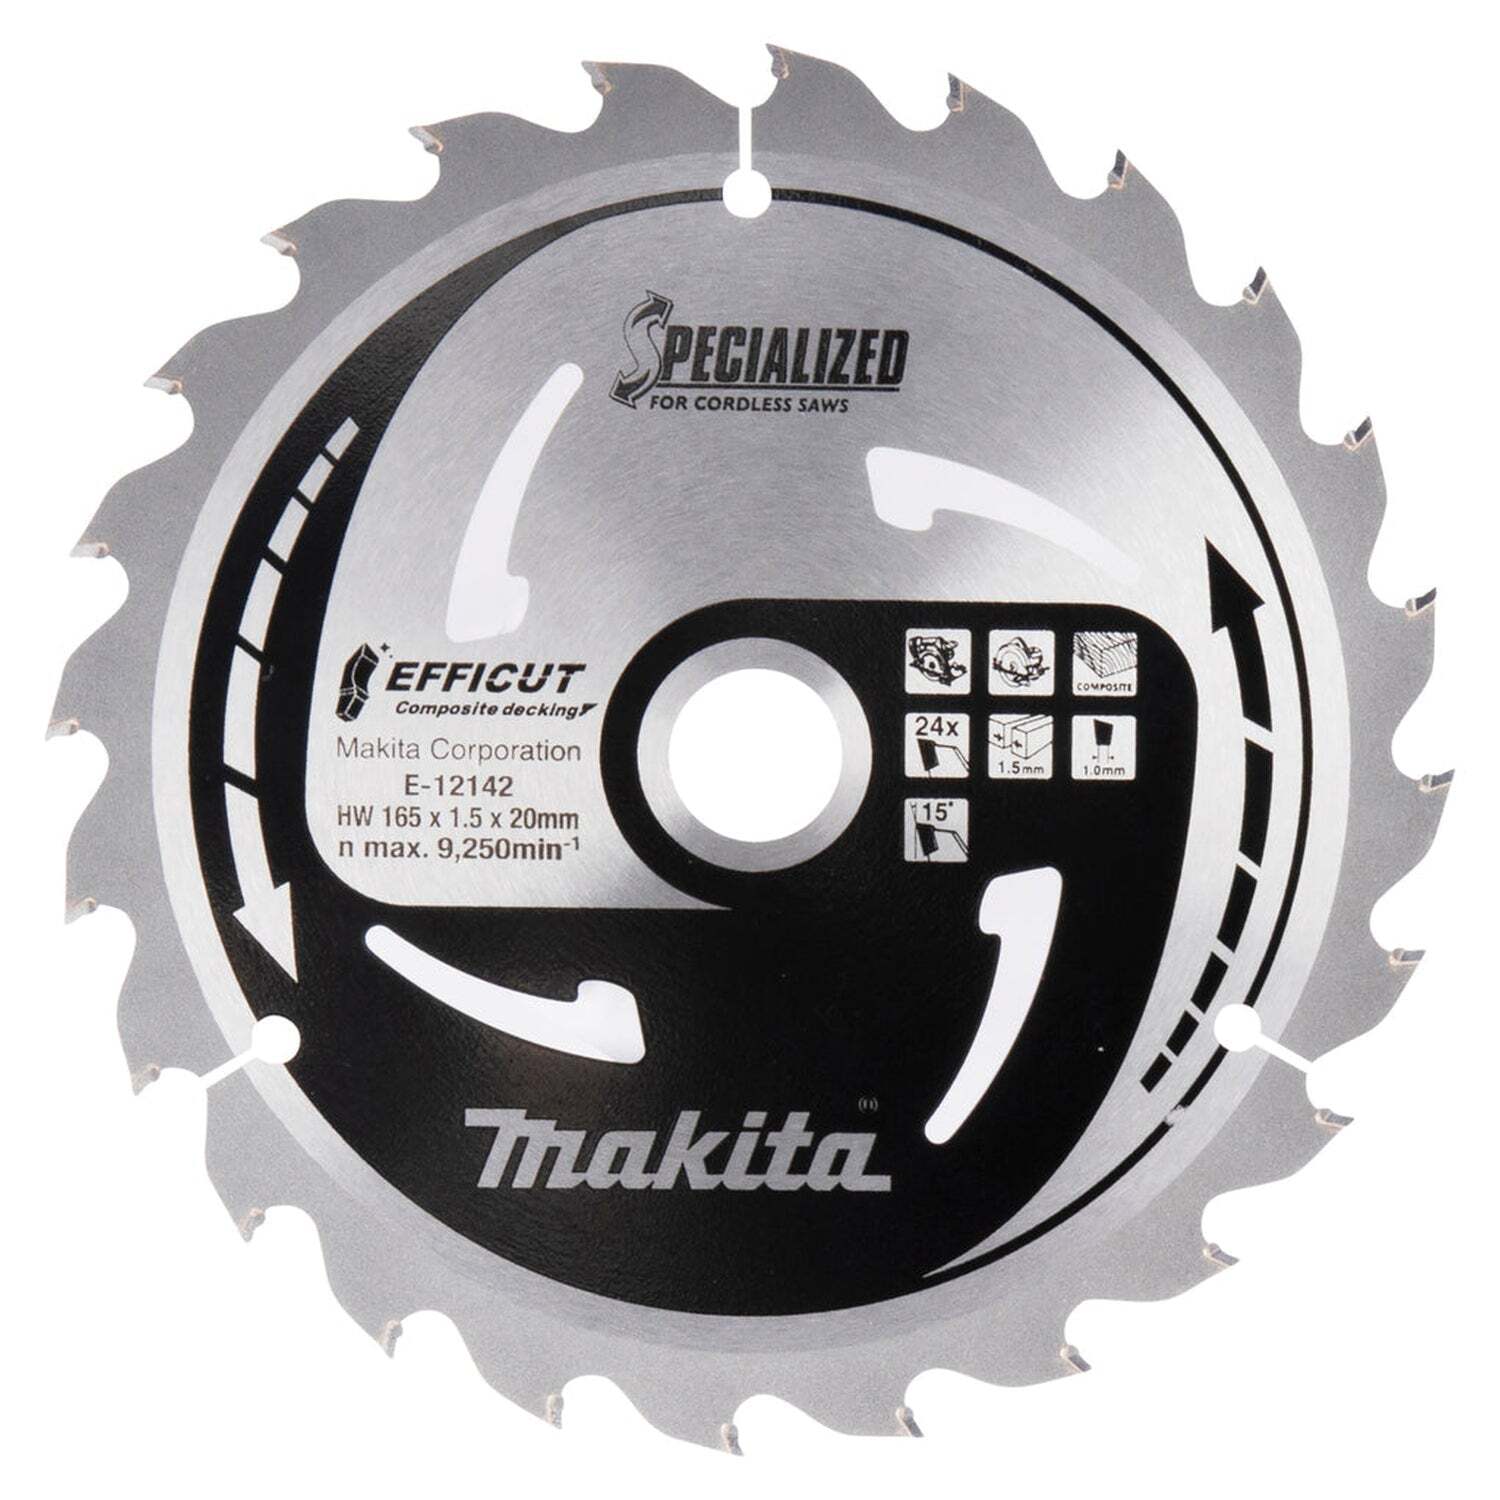 Makita E-12142 Cirkelzaagblad voor WPC | Efficut | Ø 165mm Asgat 20mm 24T